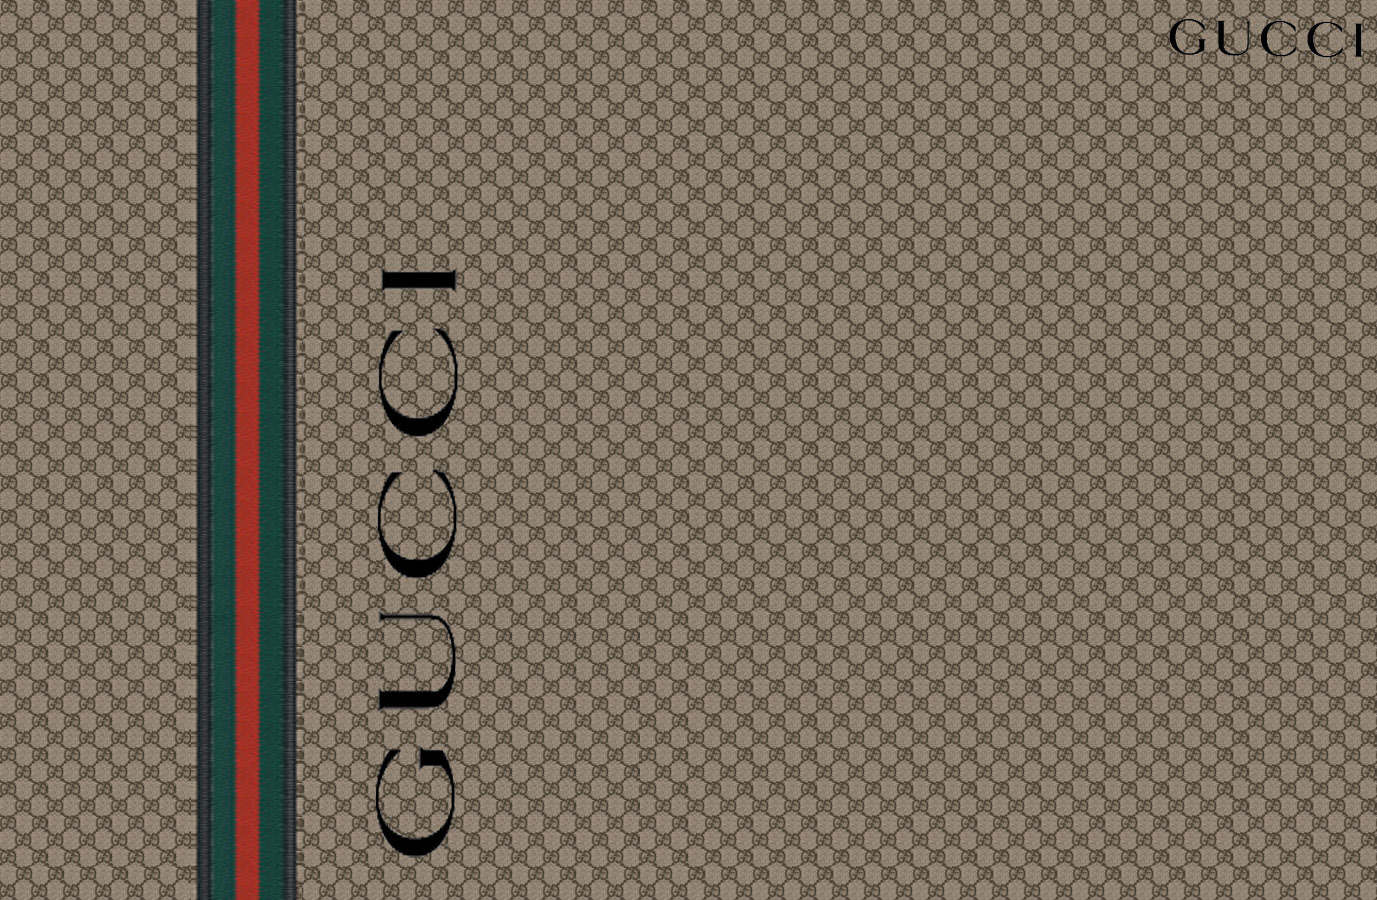 50 Gucci Print Wallpaper On Wallpapersafari